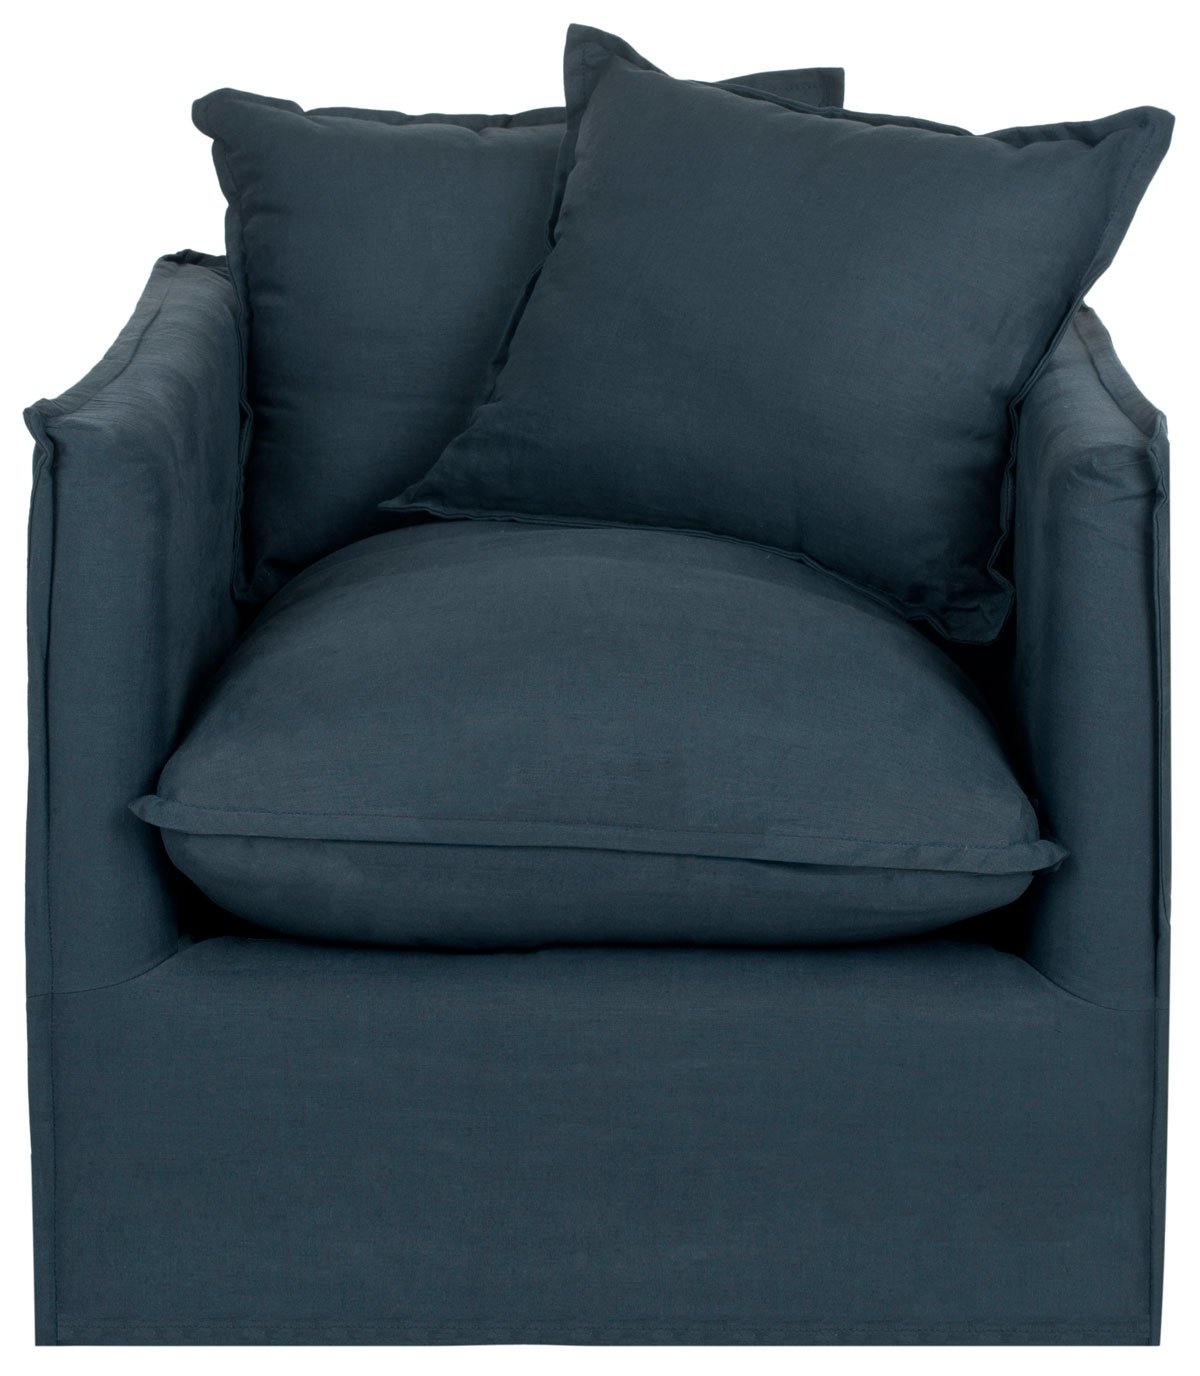 Joey Arm Chair - Blue/Black - Safavieh - Image 2